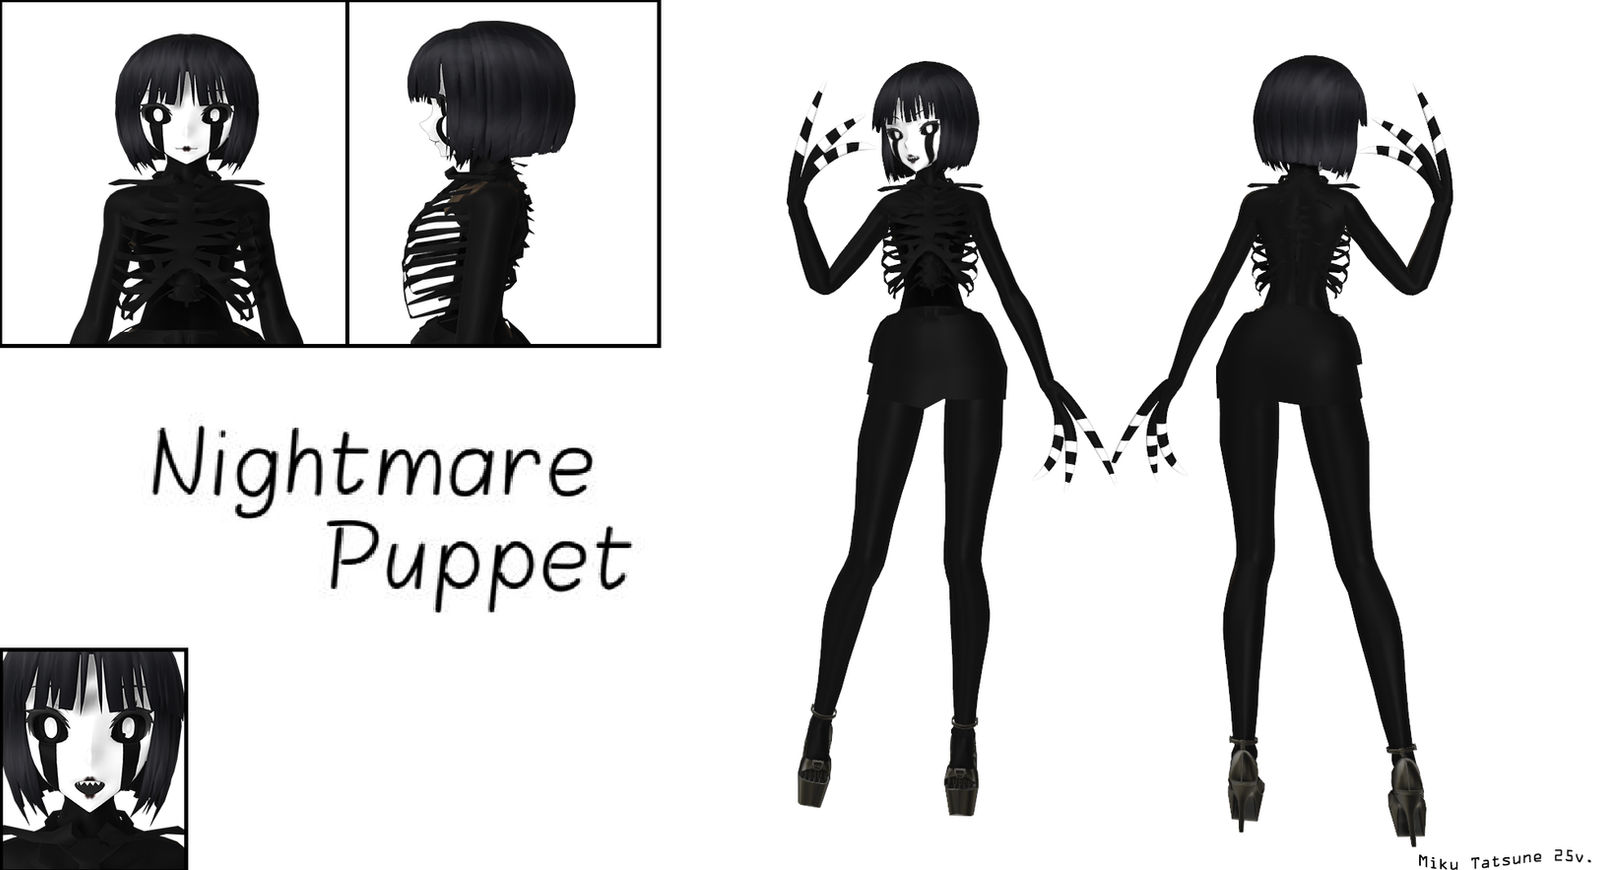 The puppet has got a. Nightmare Puppet.